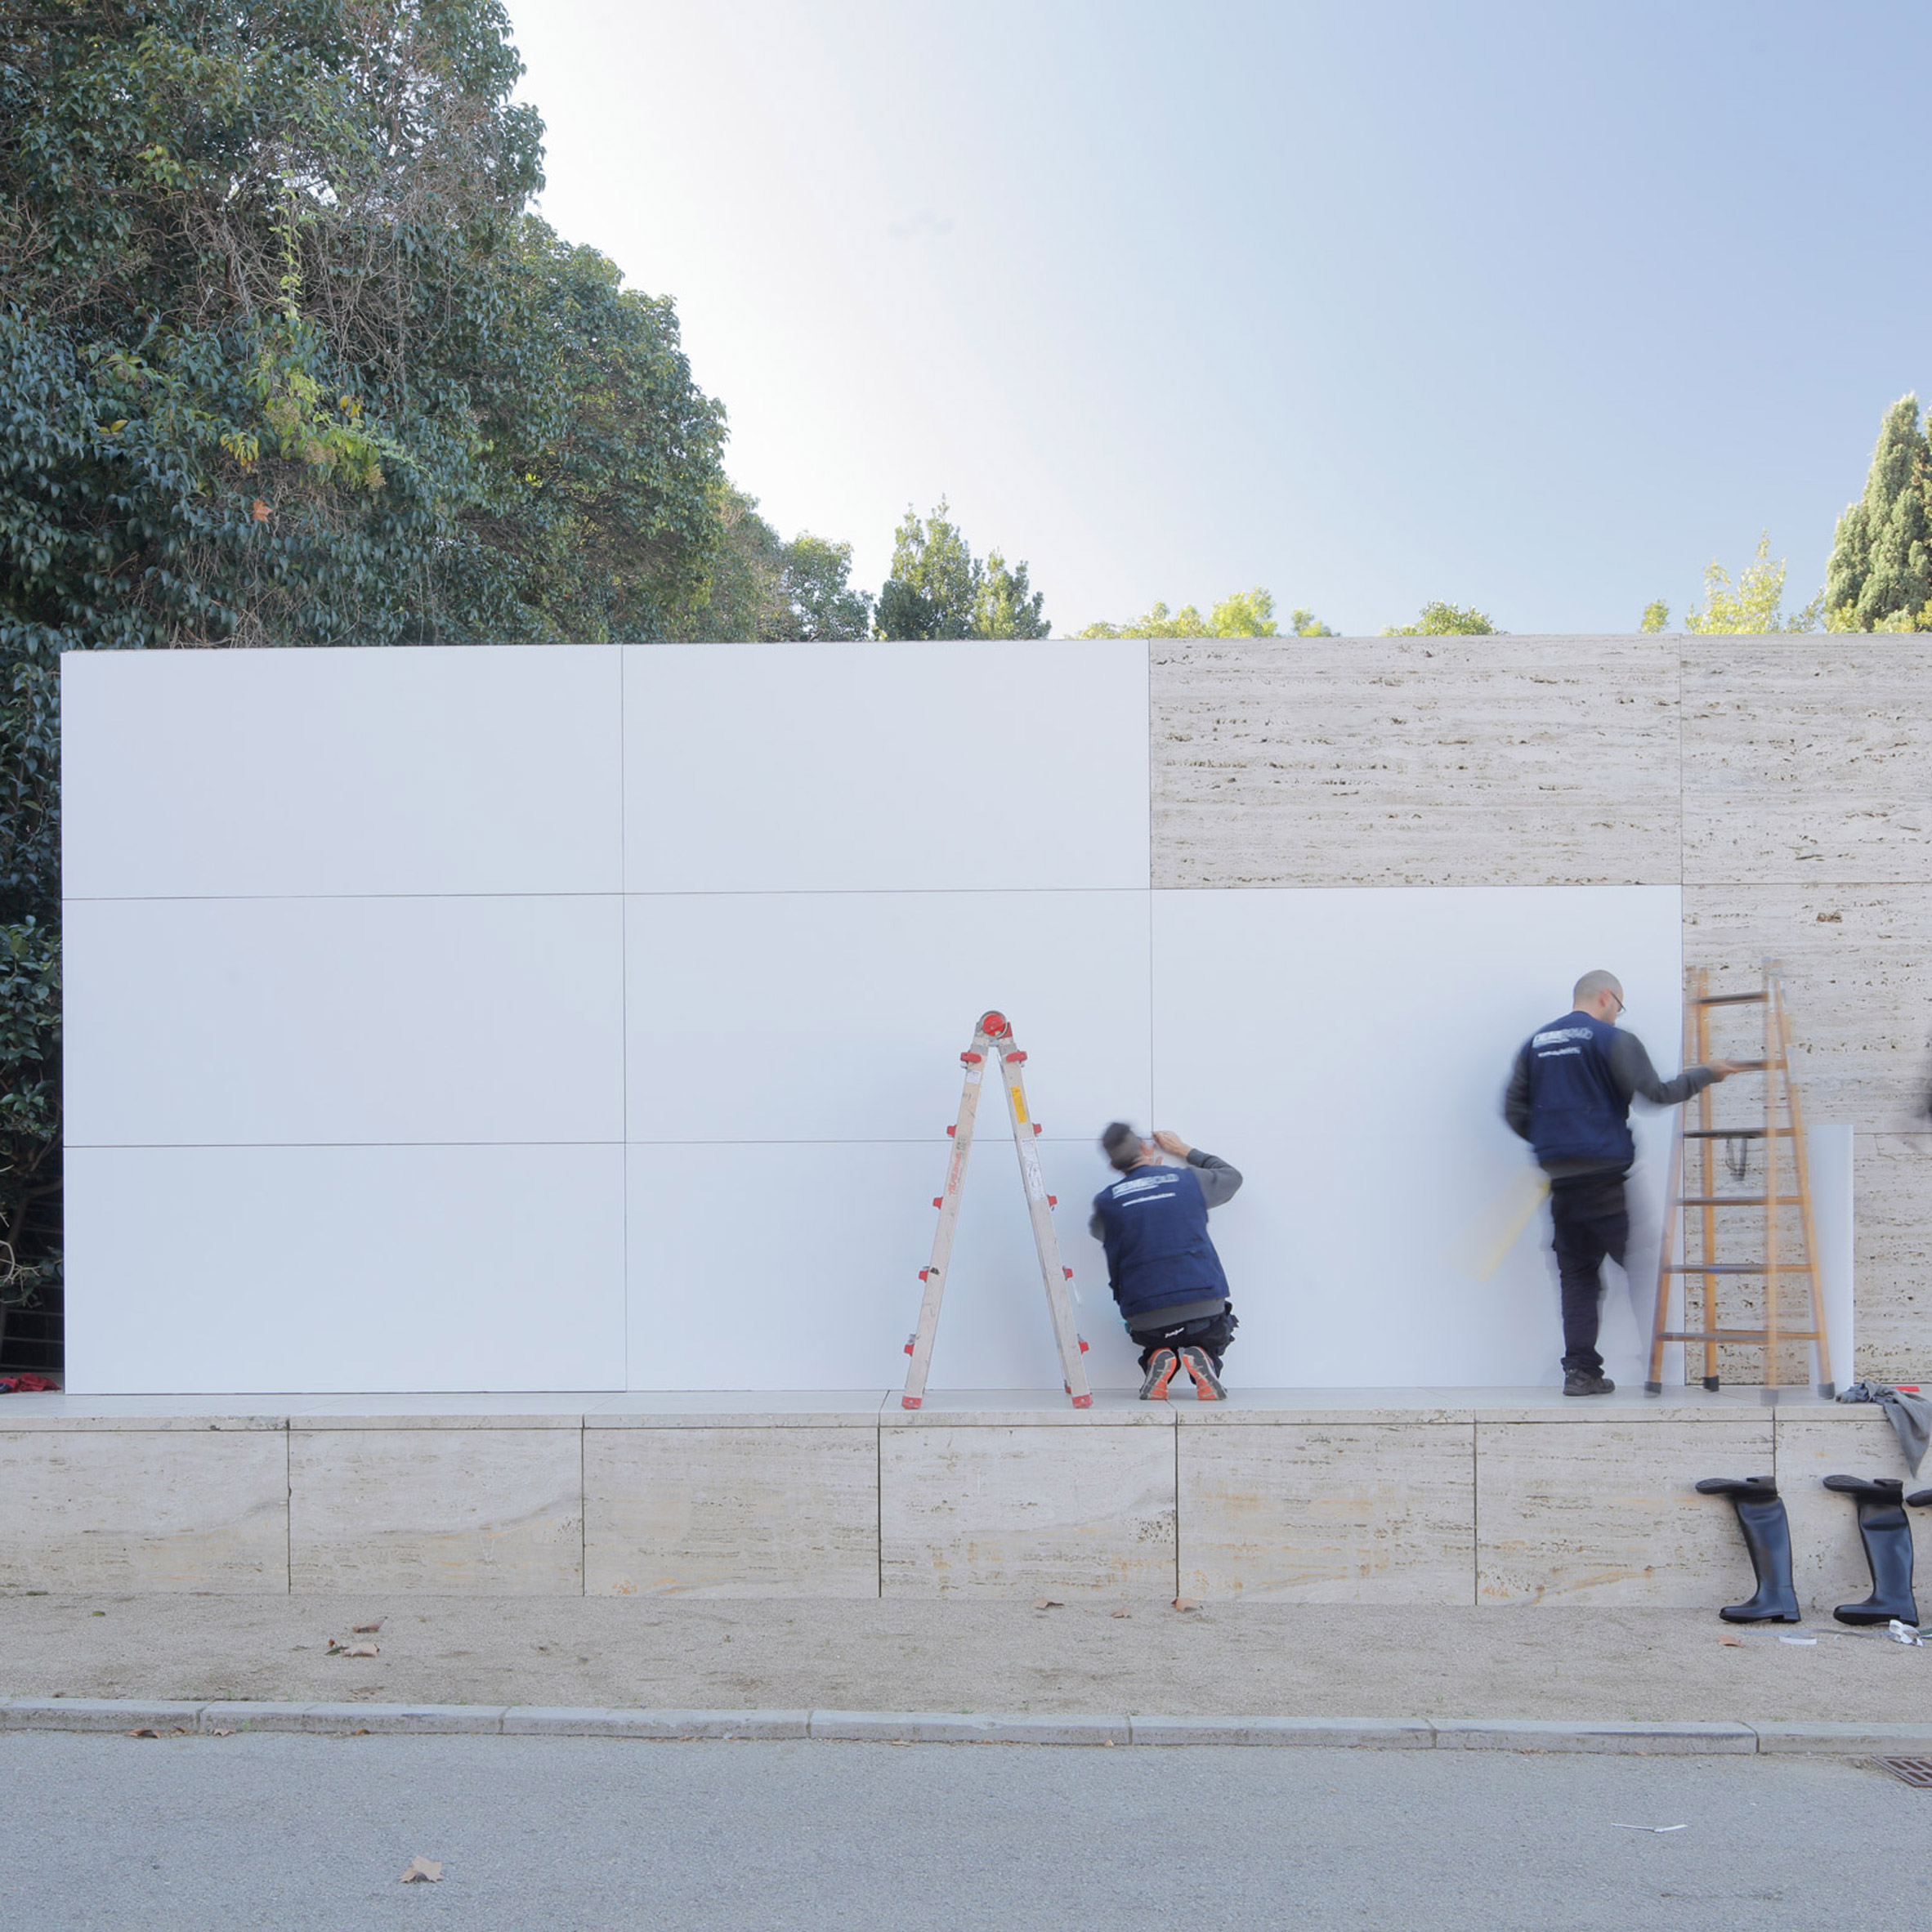 Mies van der Rohe's Barcelona Pavilion loses its marble walls-0